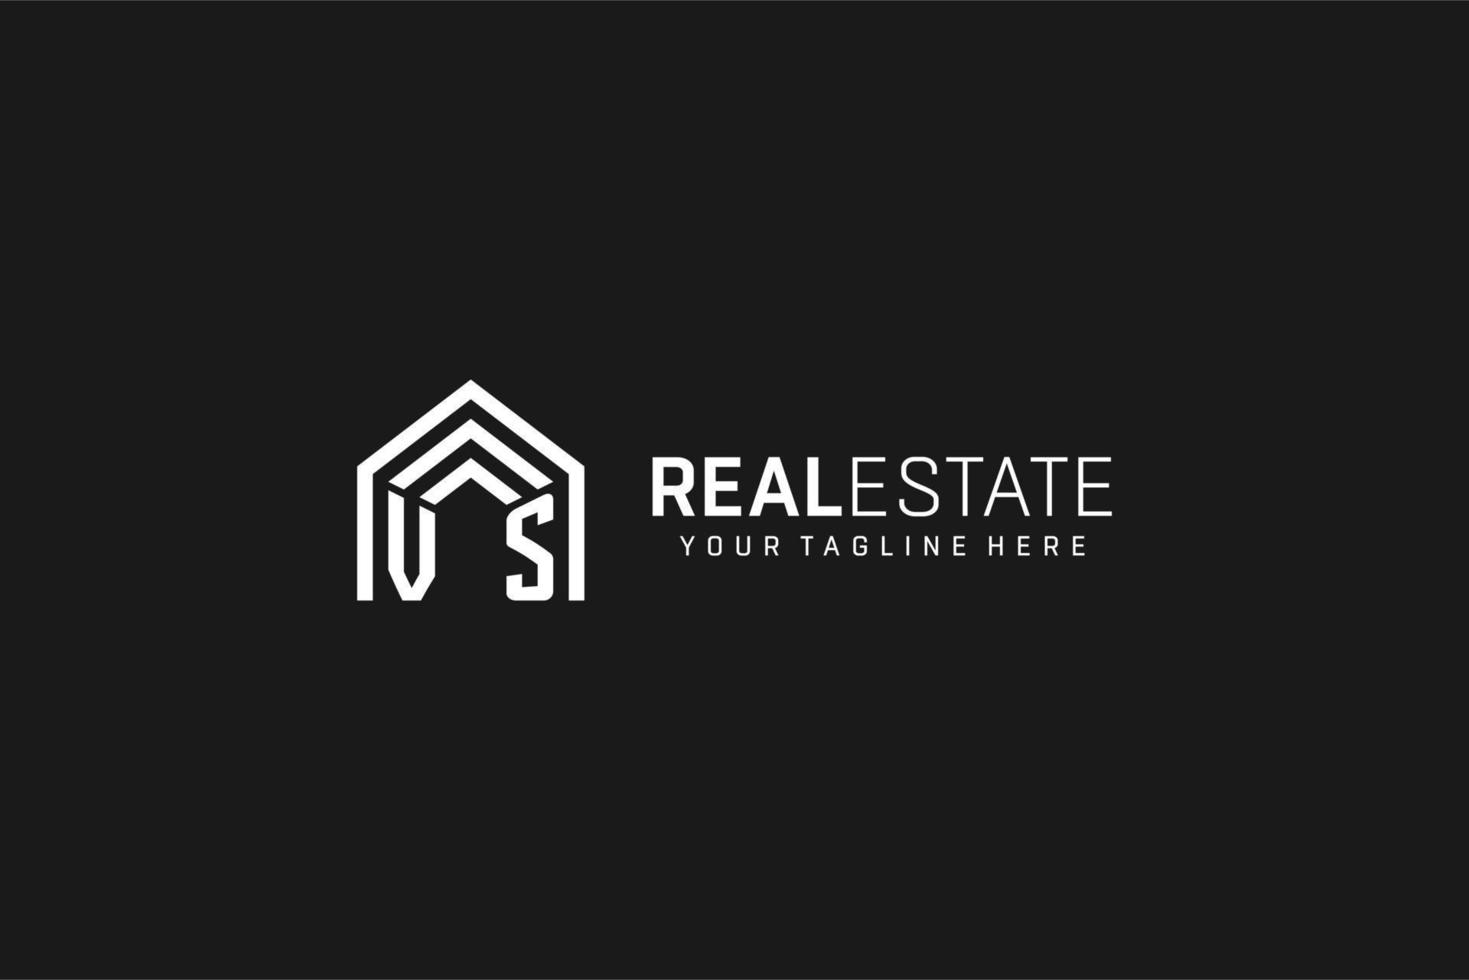 Letter VS house roof shape logo, creative real estate monogram logo style vector